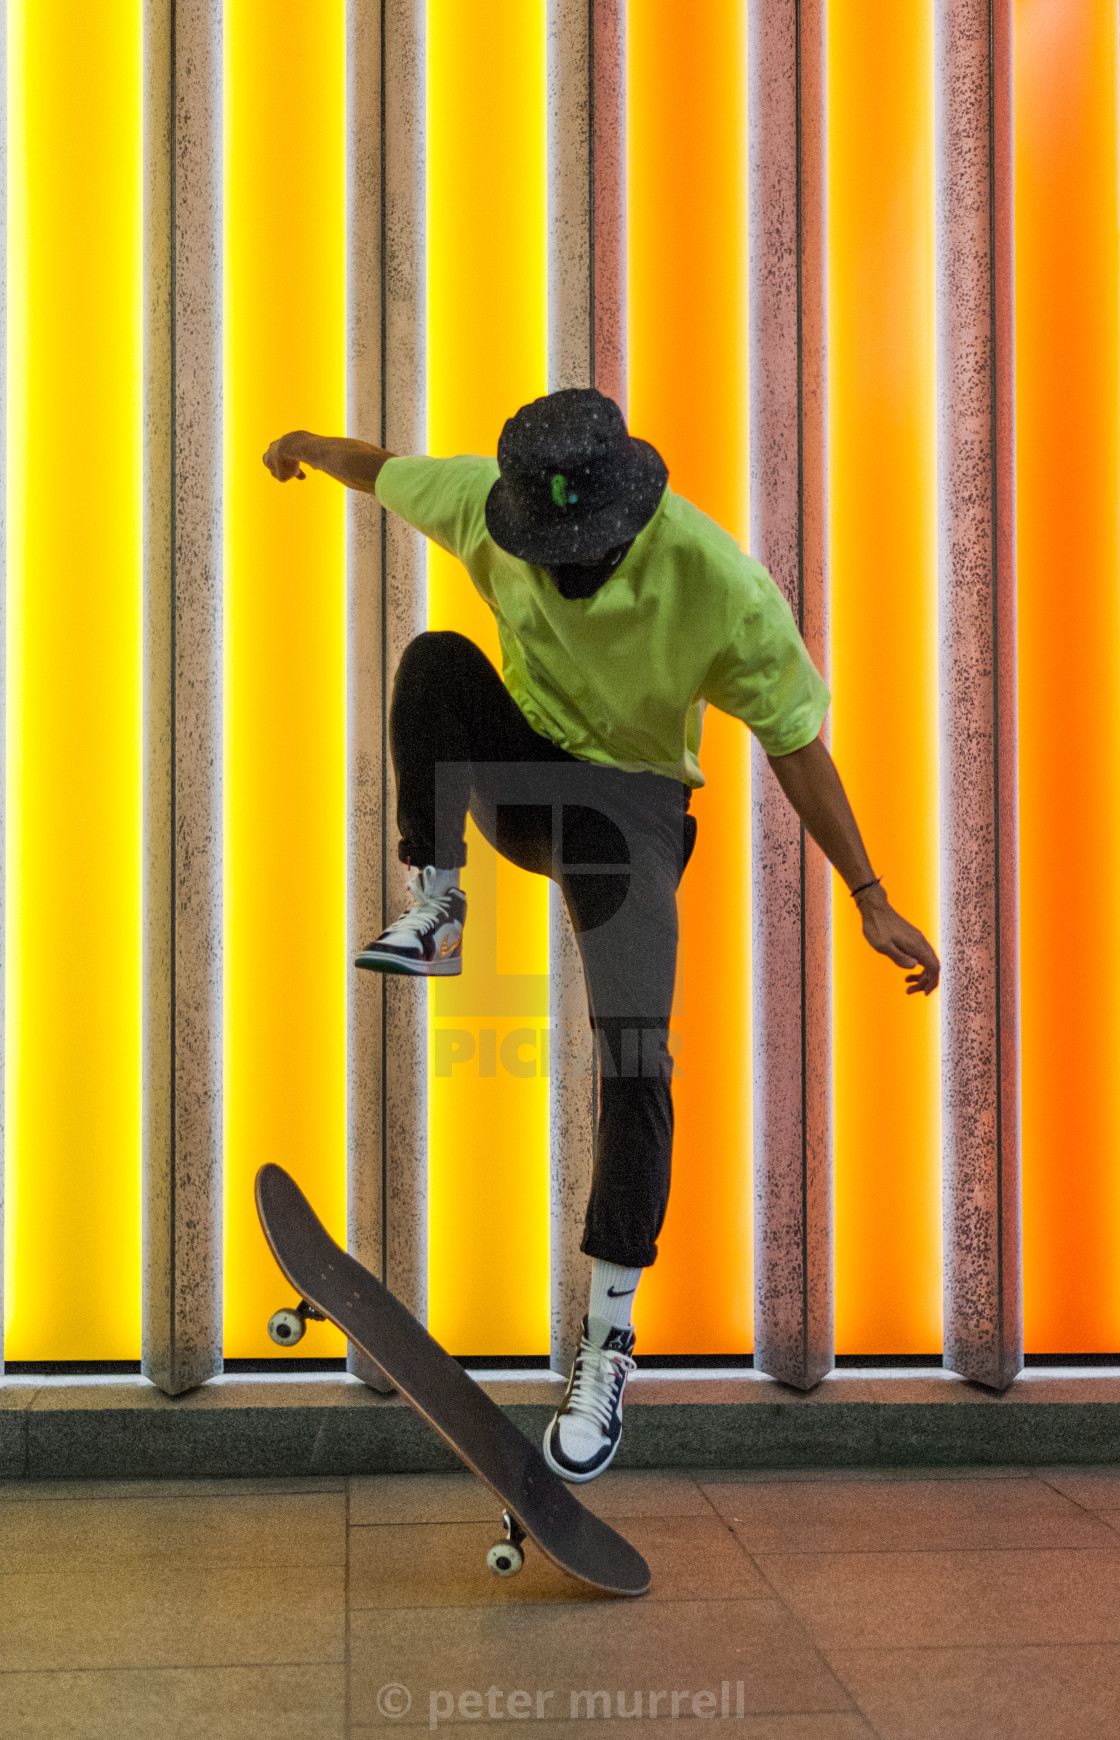 "The Skater" stock image